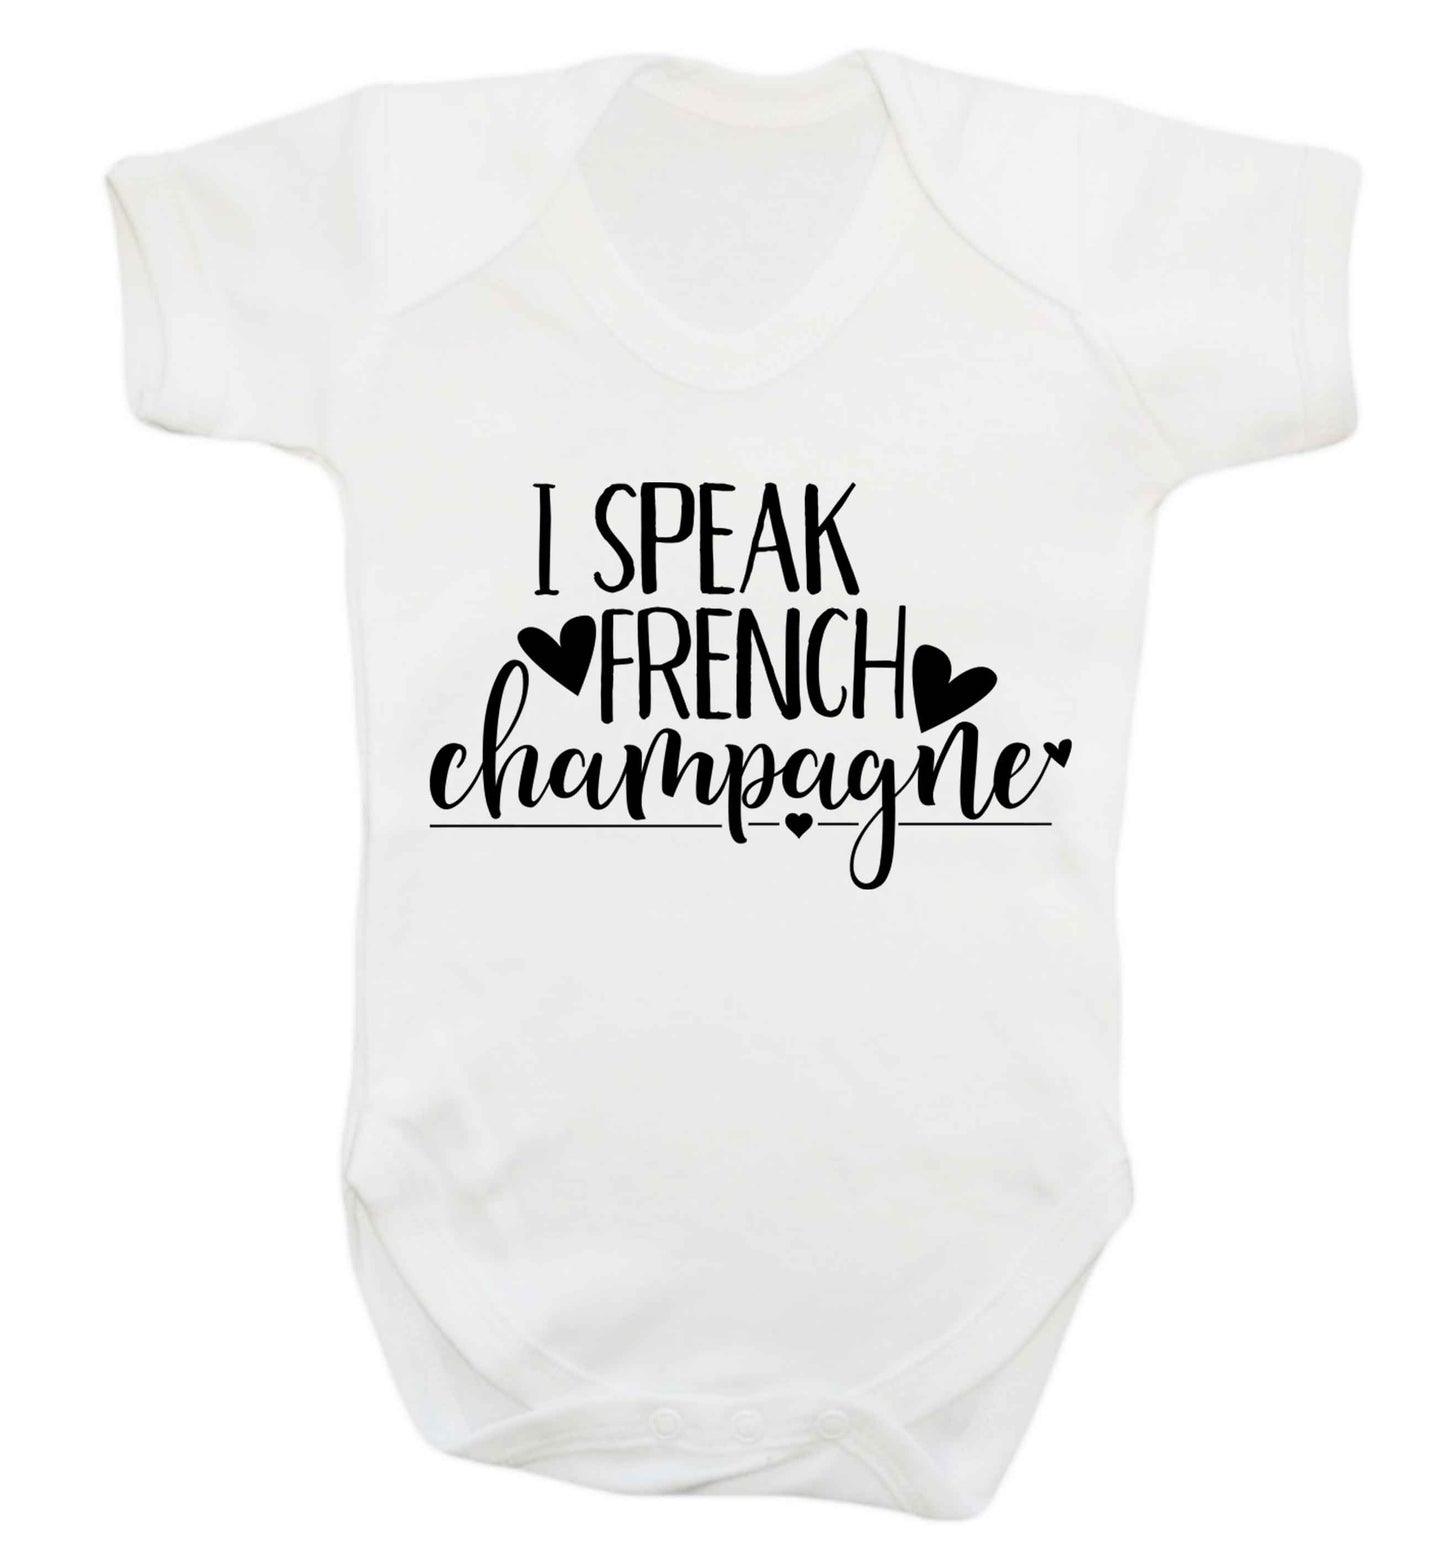 I speak french champagne Baby Vest white 18-24 months